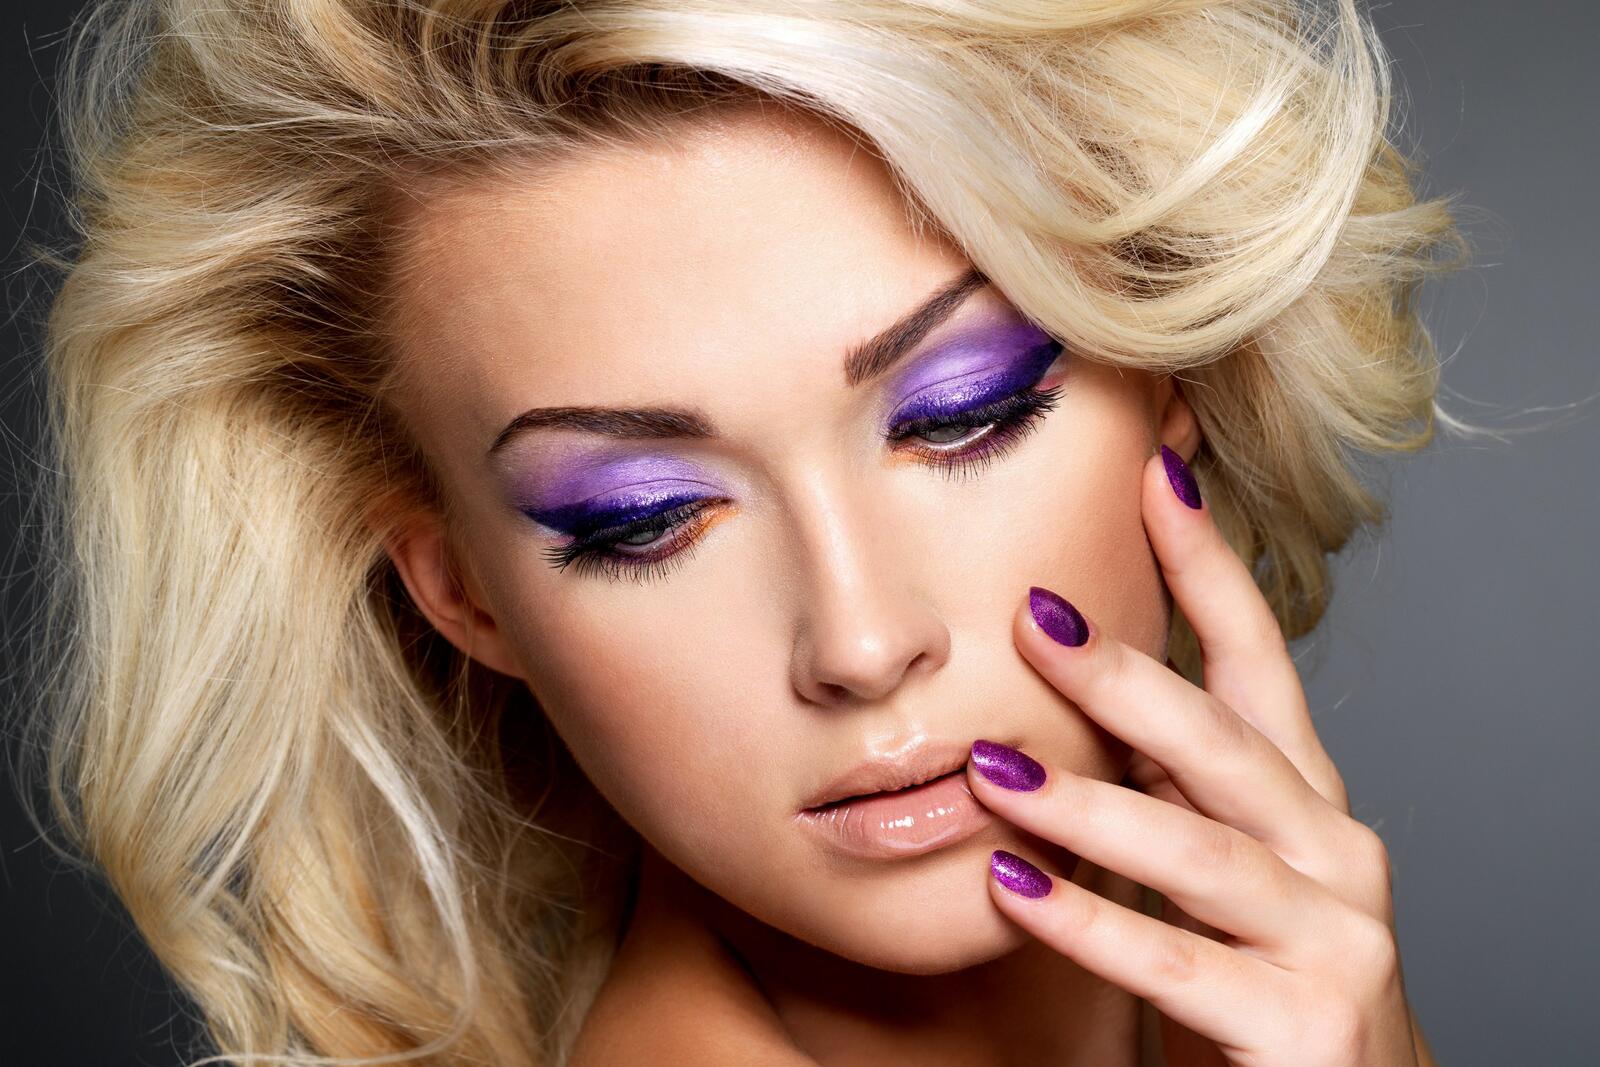 Free photo Blonde with beautiful purple makeup